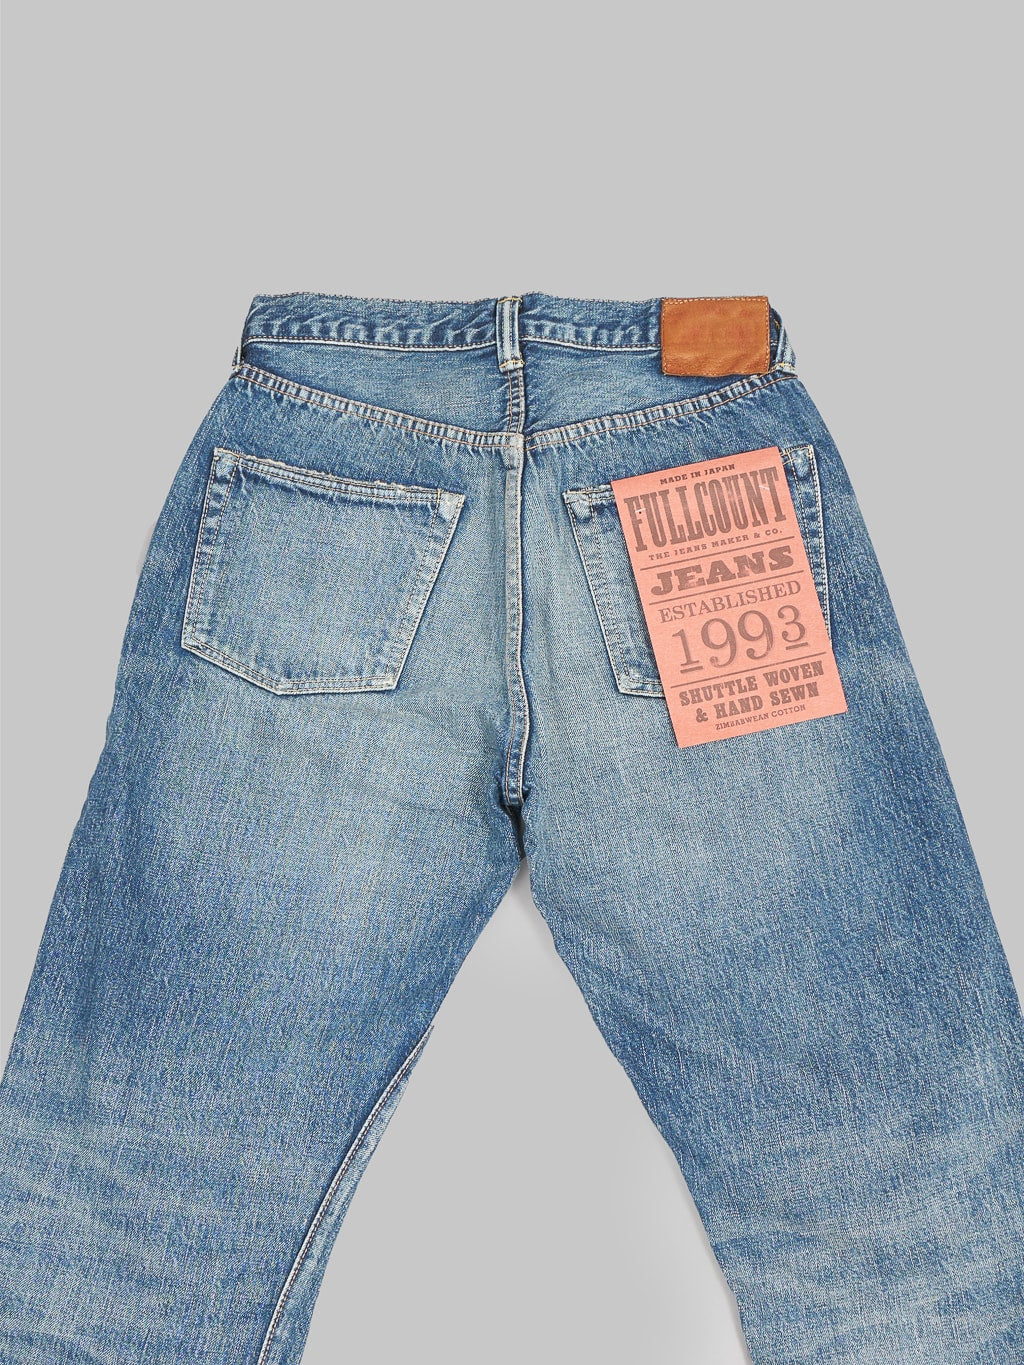 Fullcount 1108 Dartford Slim Straight Jeans back classic view 